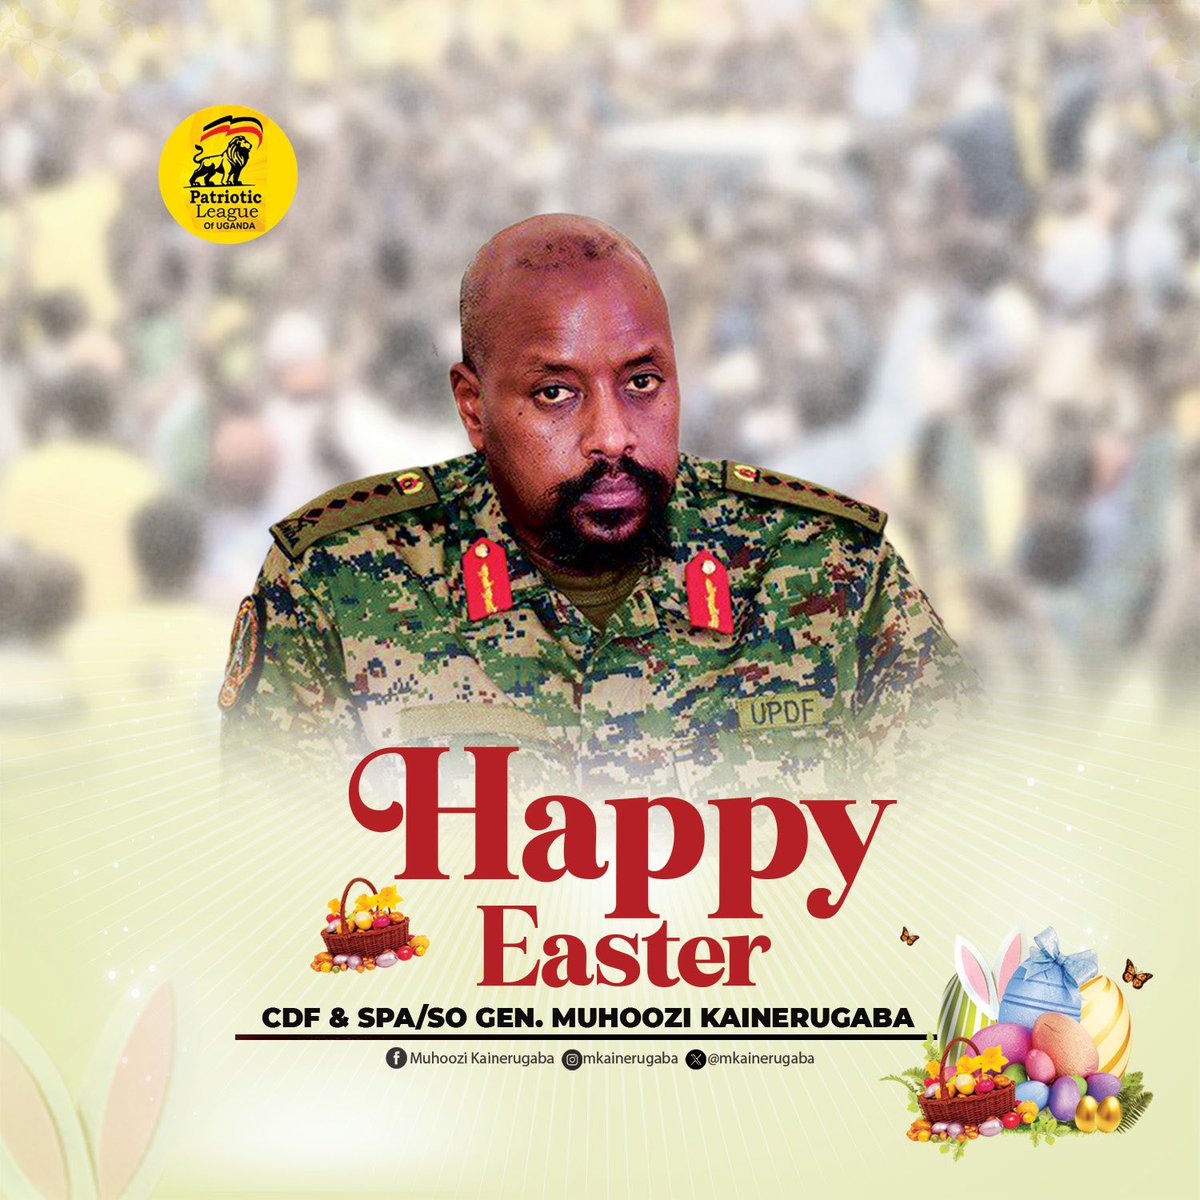 Happy Easter to you all! @mkainerugaba #HappyEaster